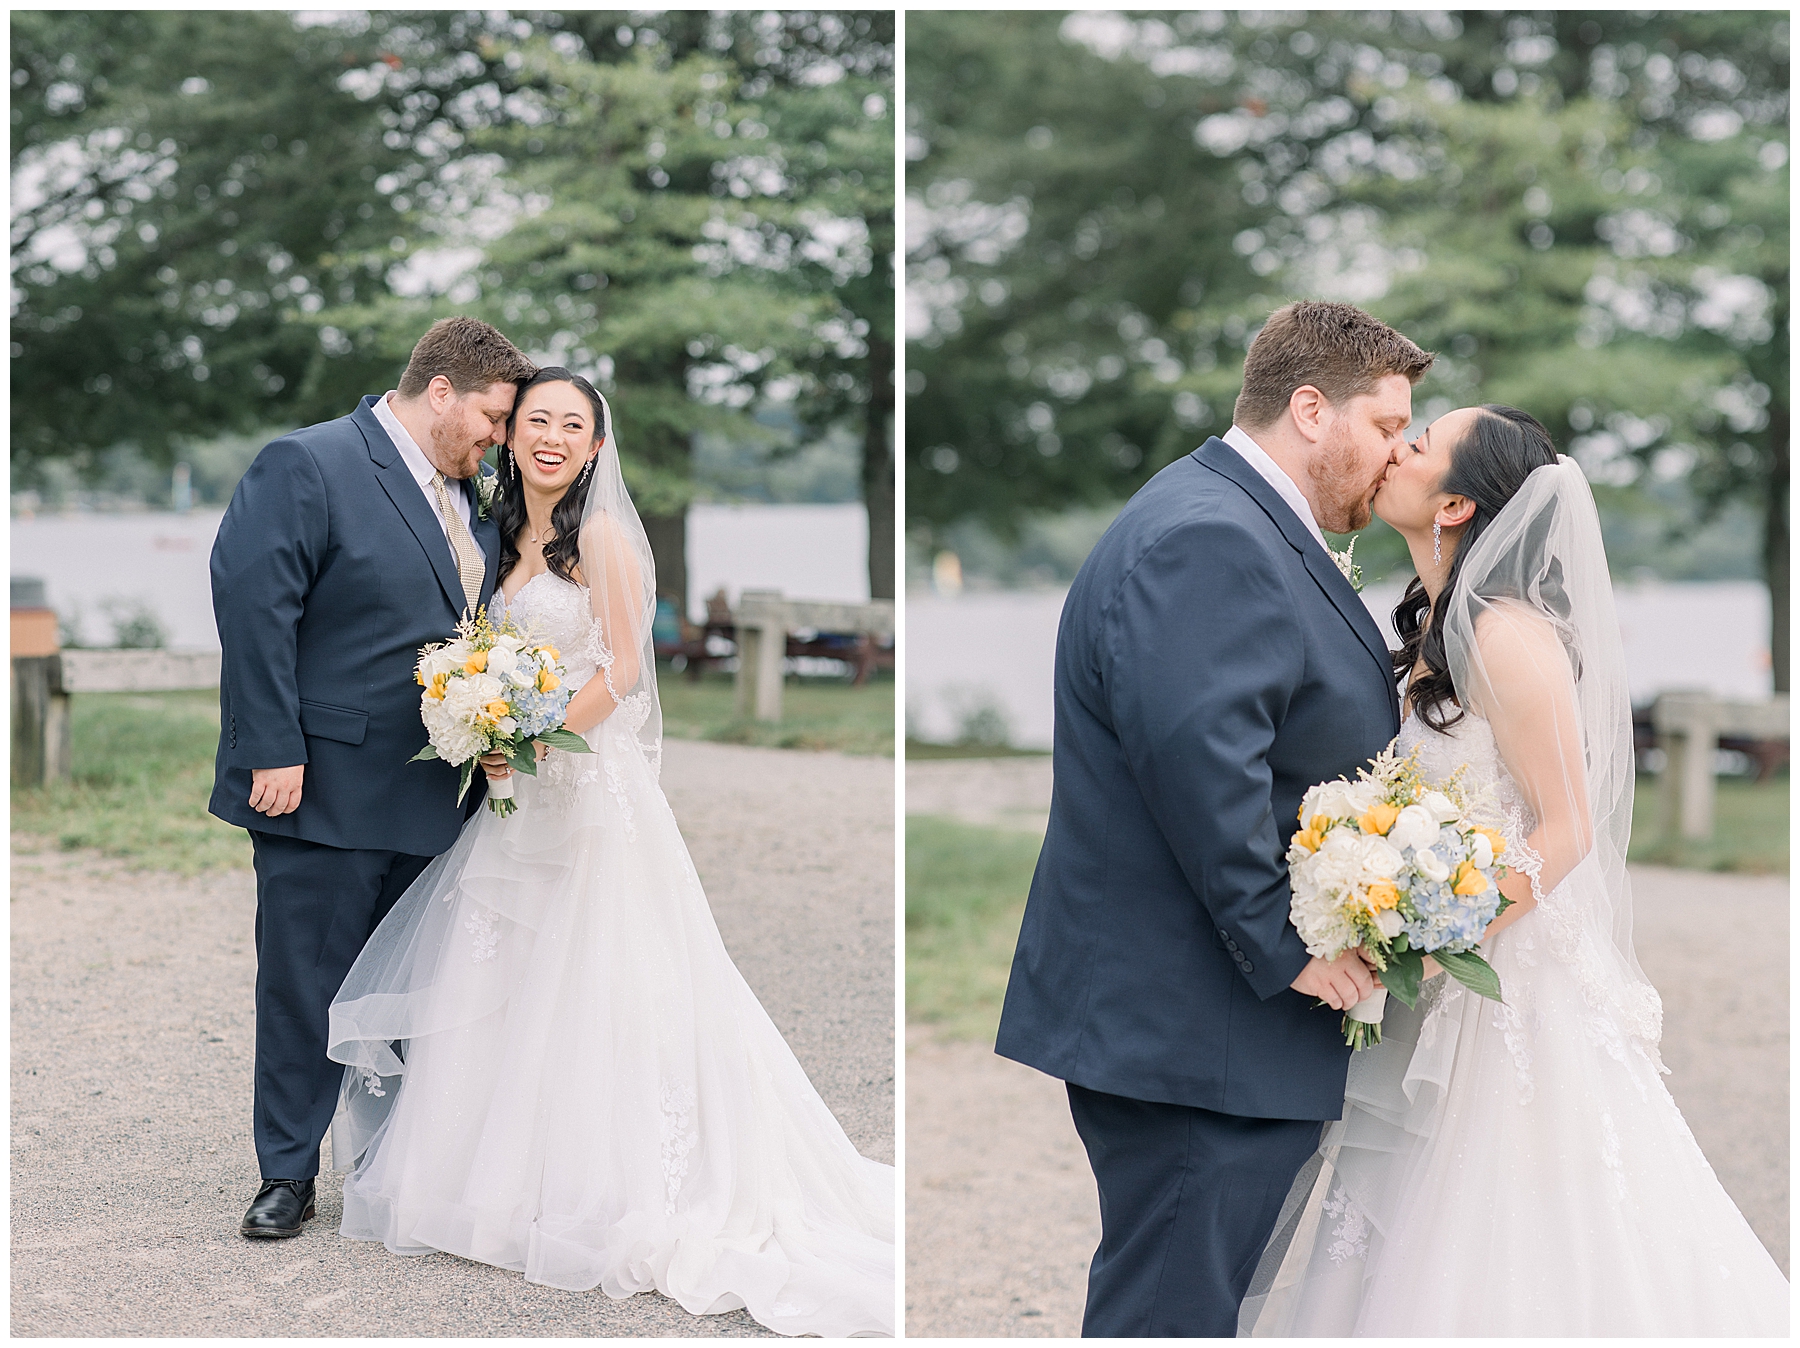 Boston MA wedding photographer captures bride and groom